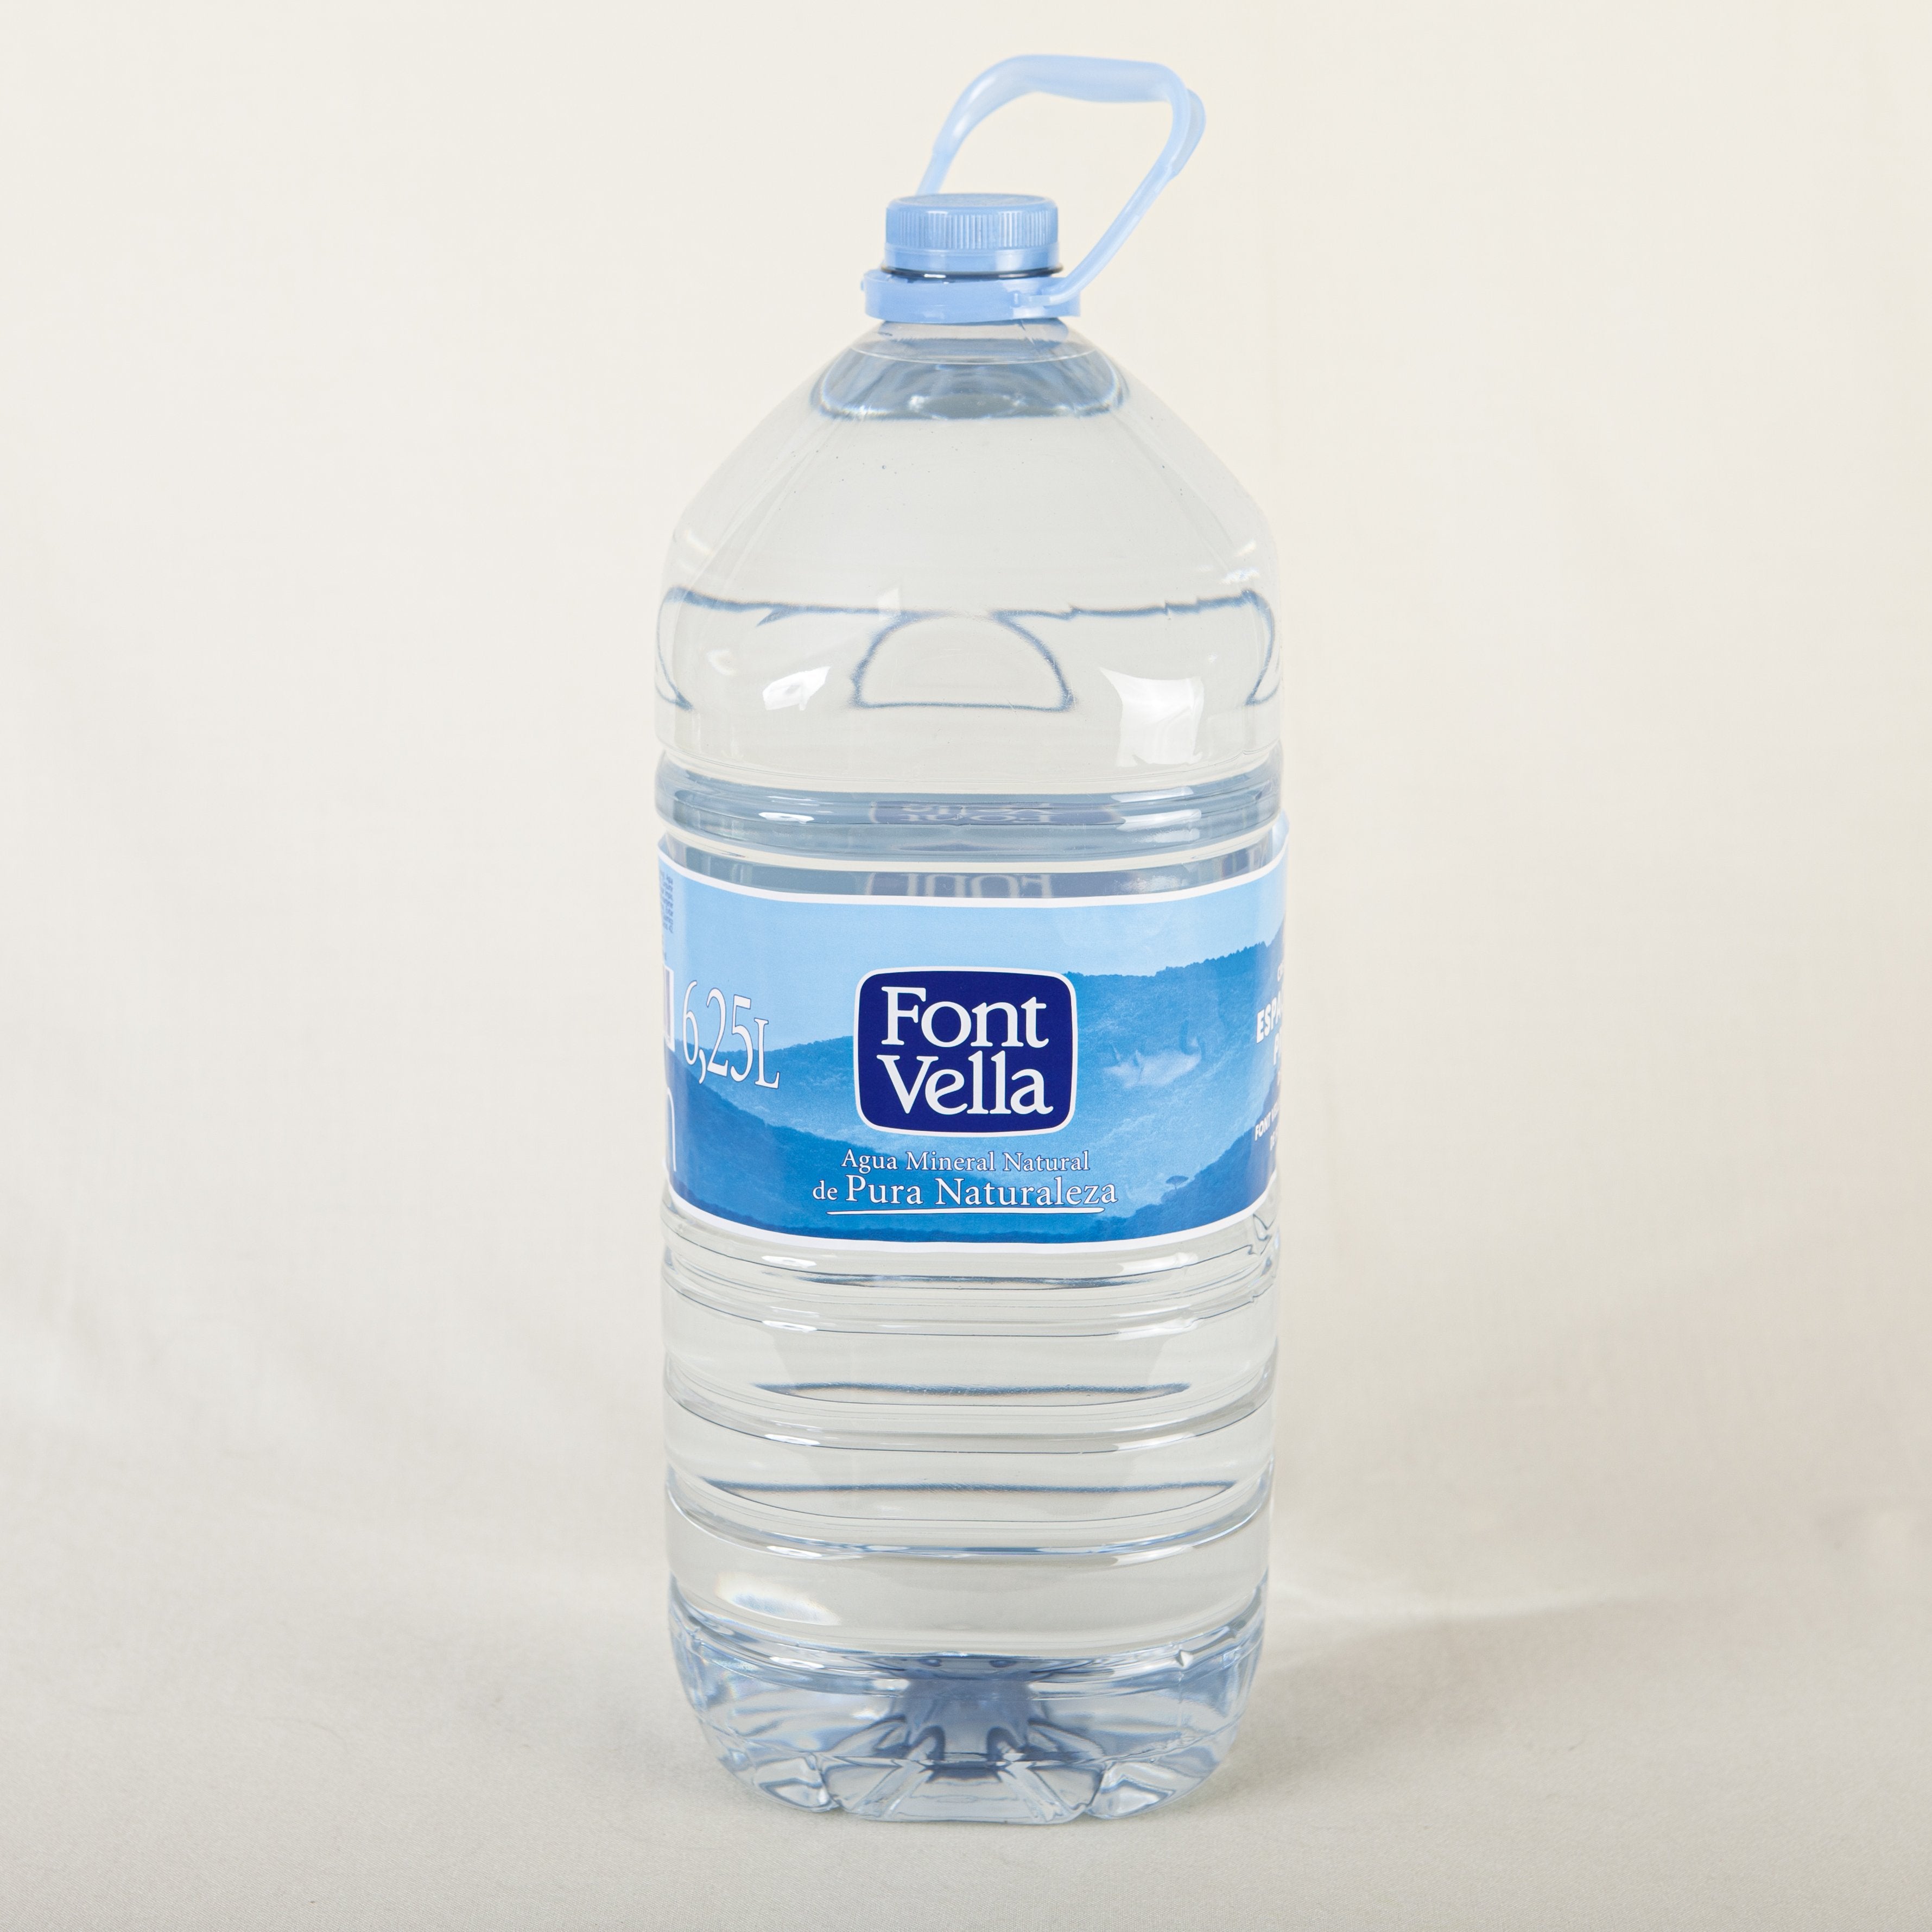 Agua destilada 25l